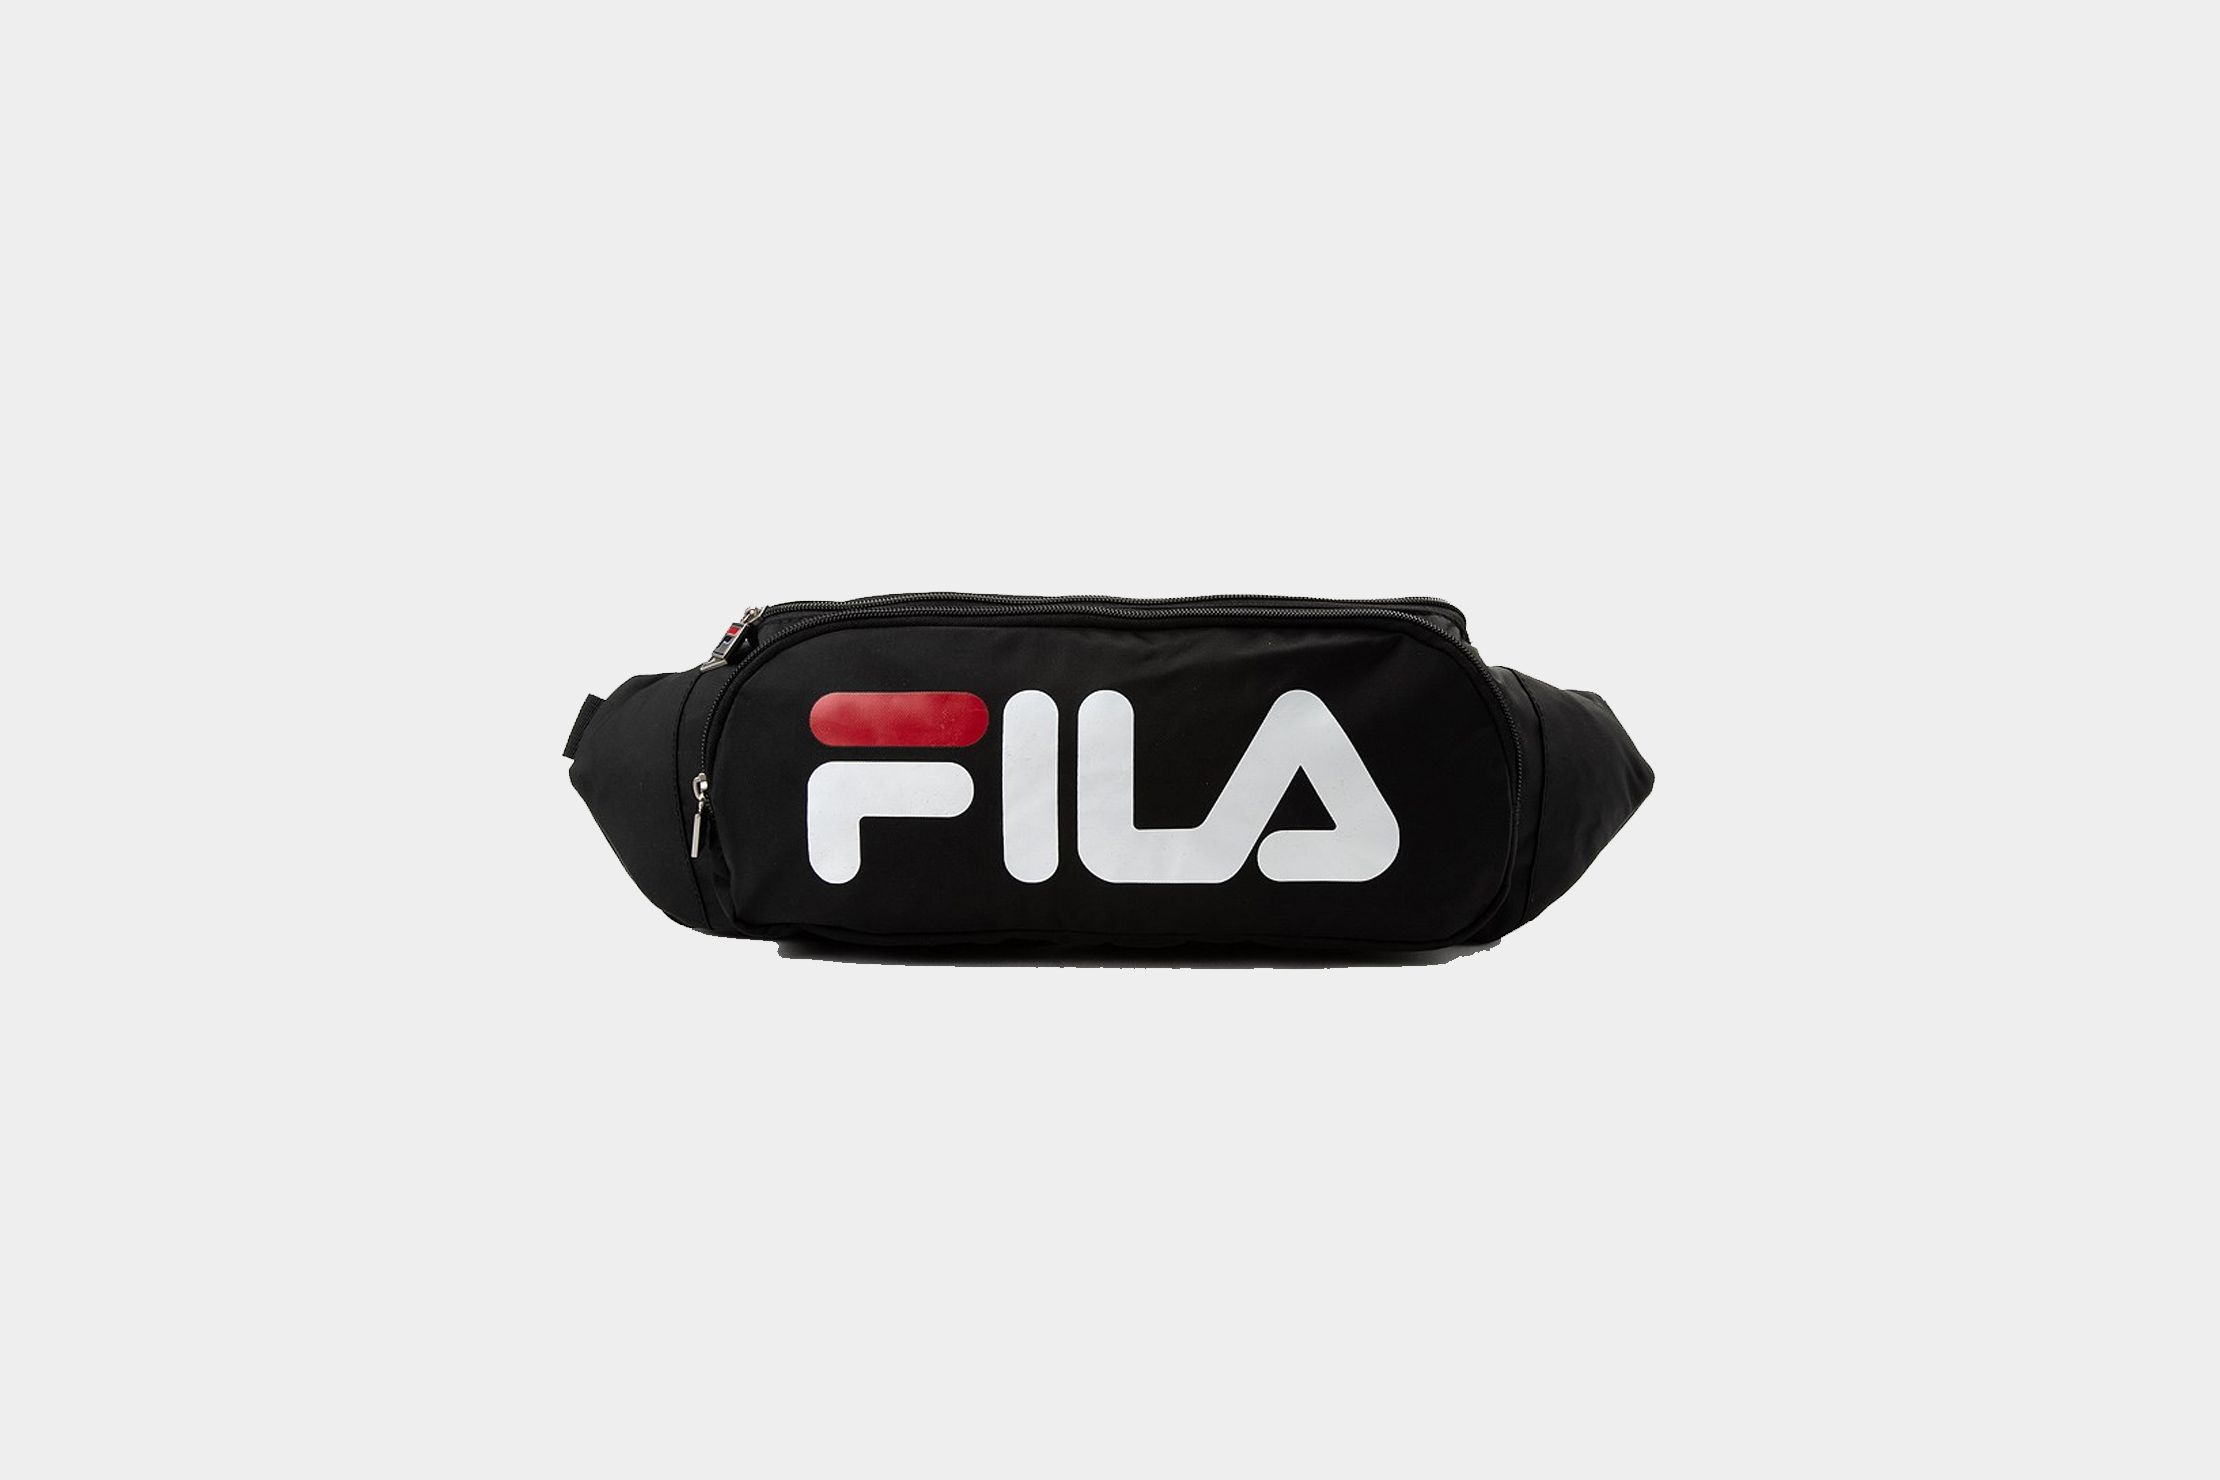 fila bag sling